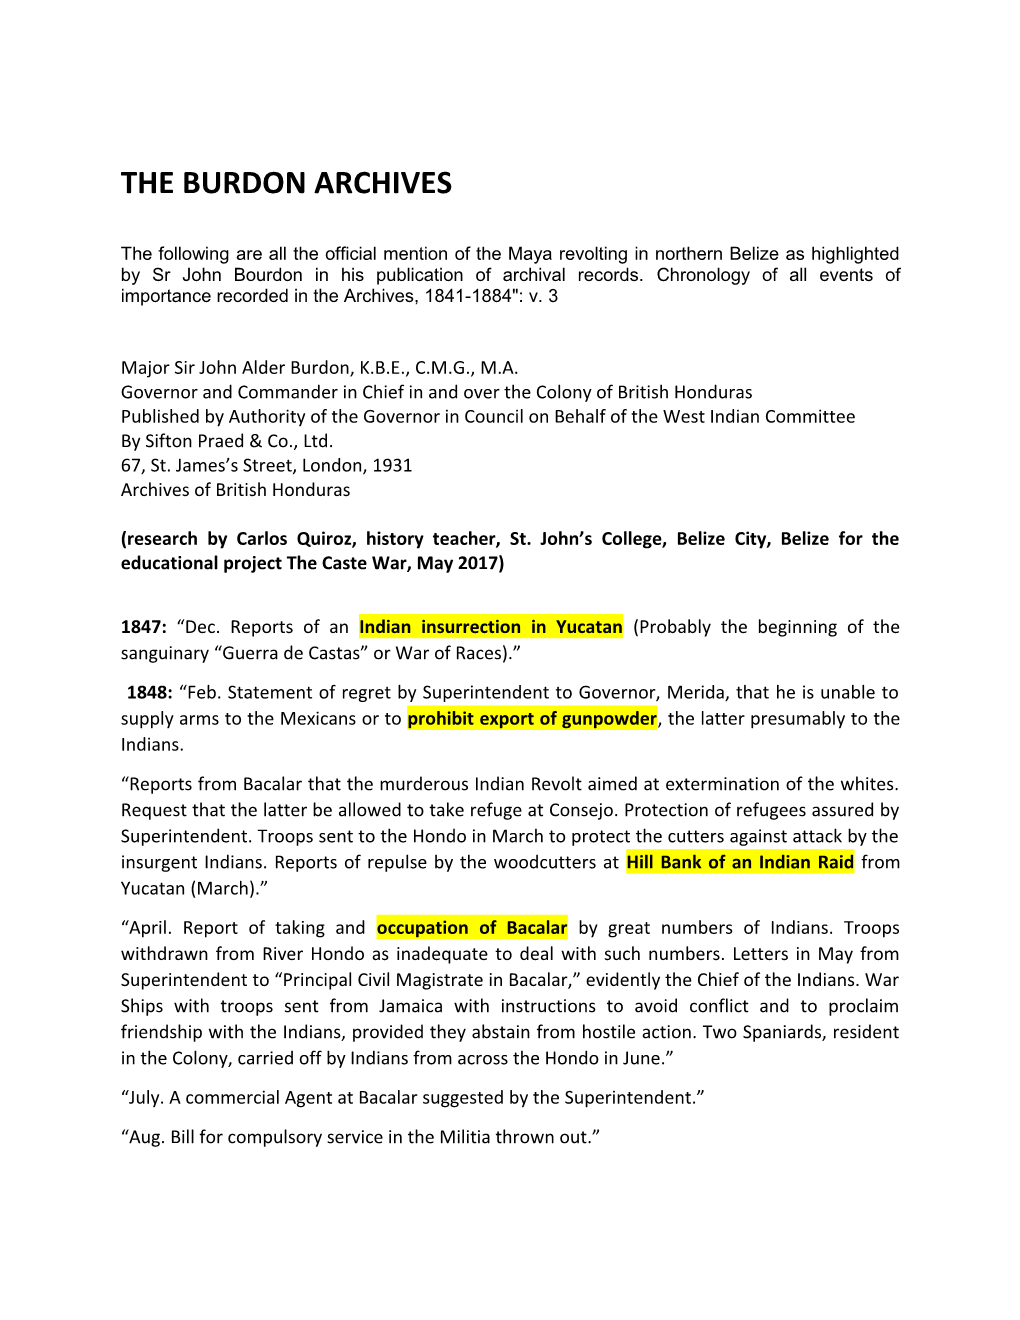 The Burdon Archives